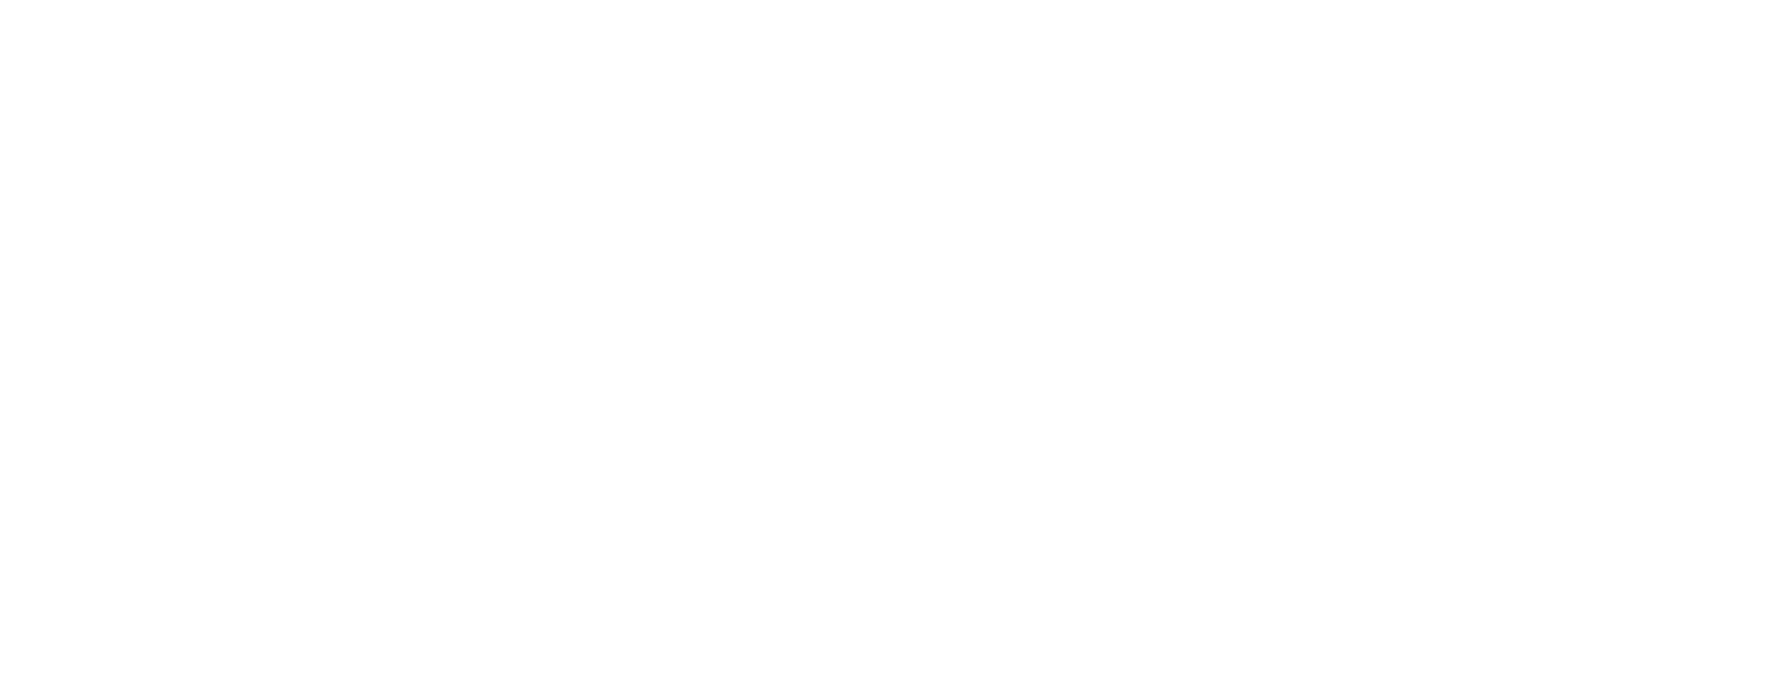 Whiskey Logo - The Story - The Dead Rabbit Irish Whiskey